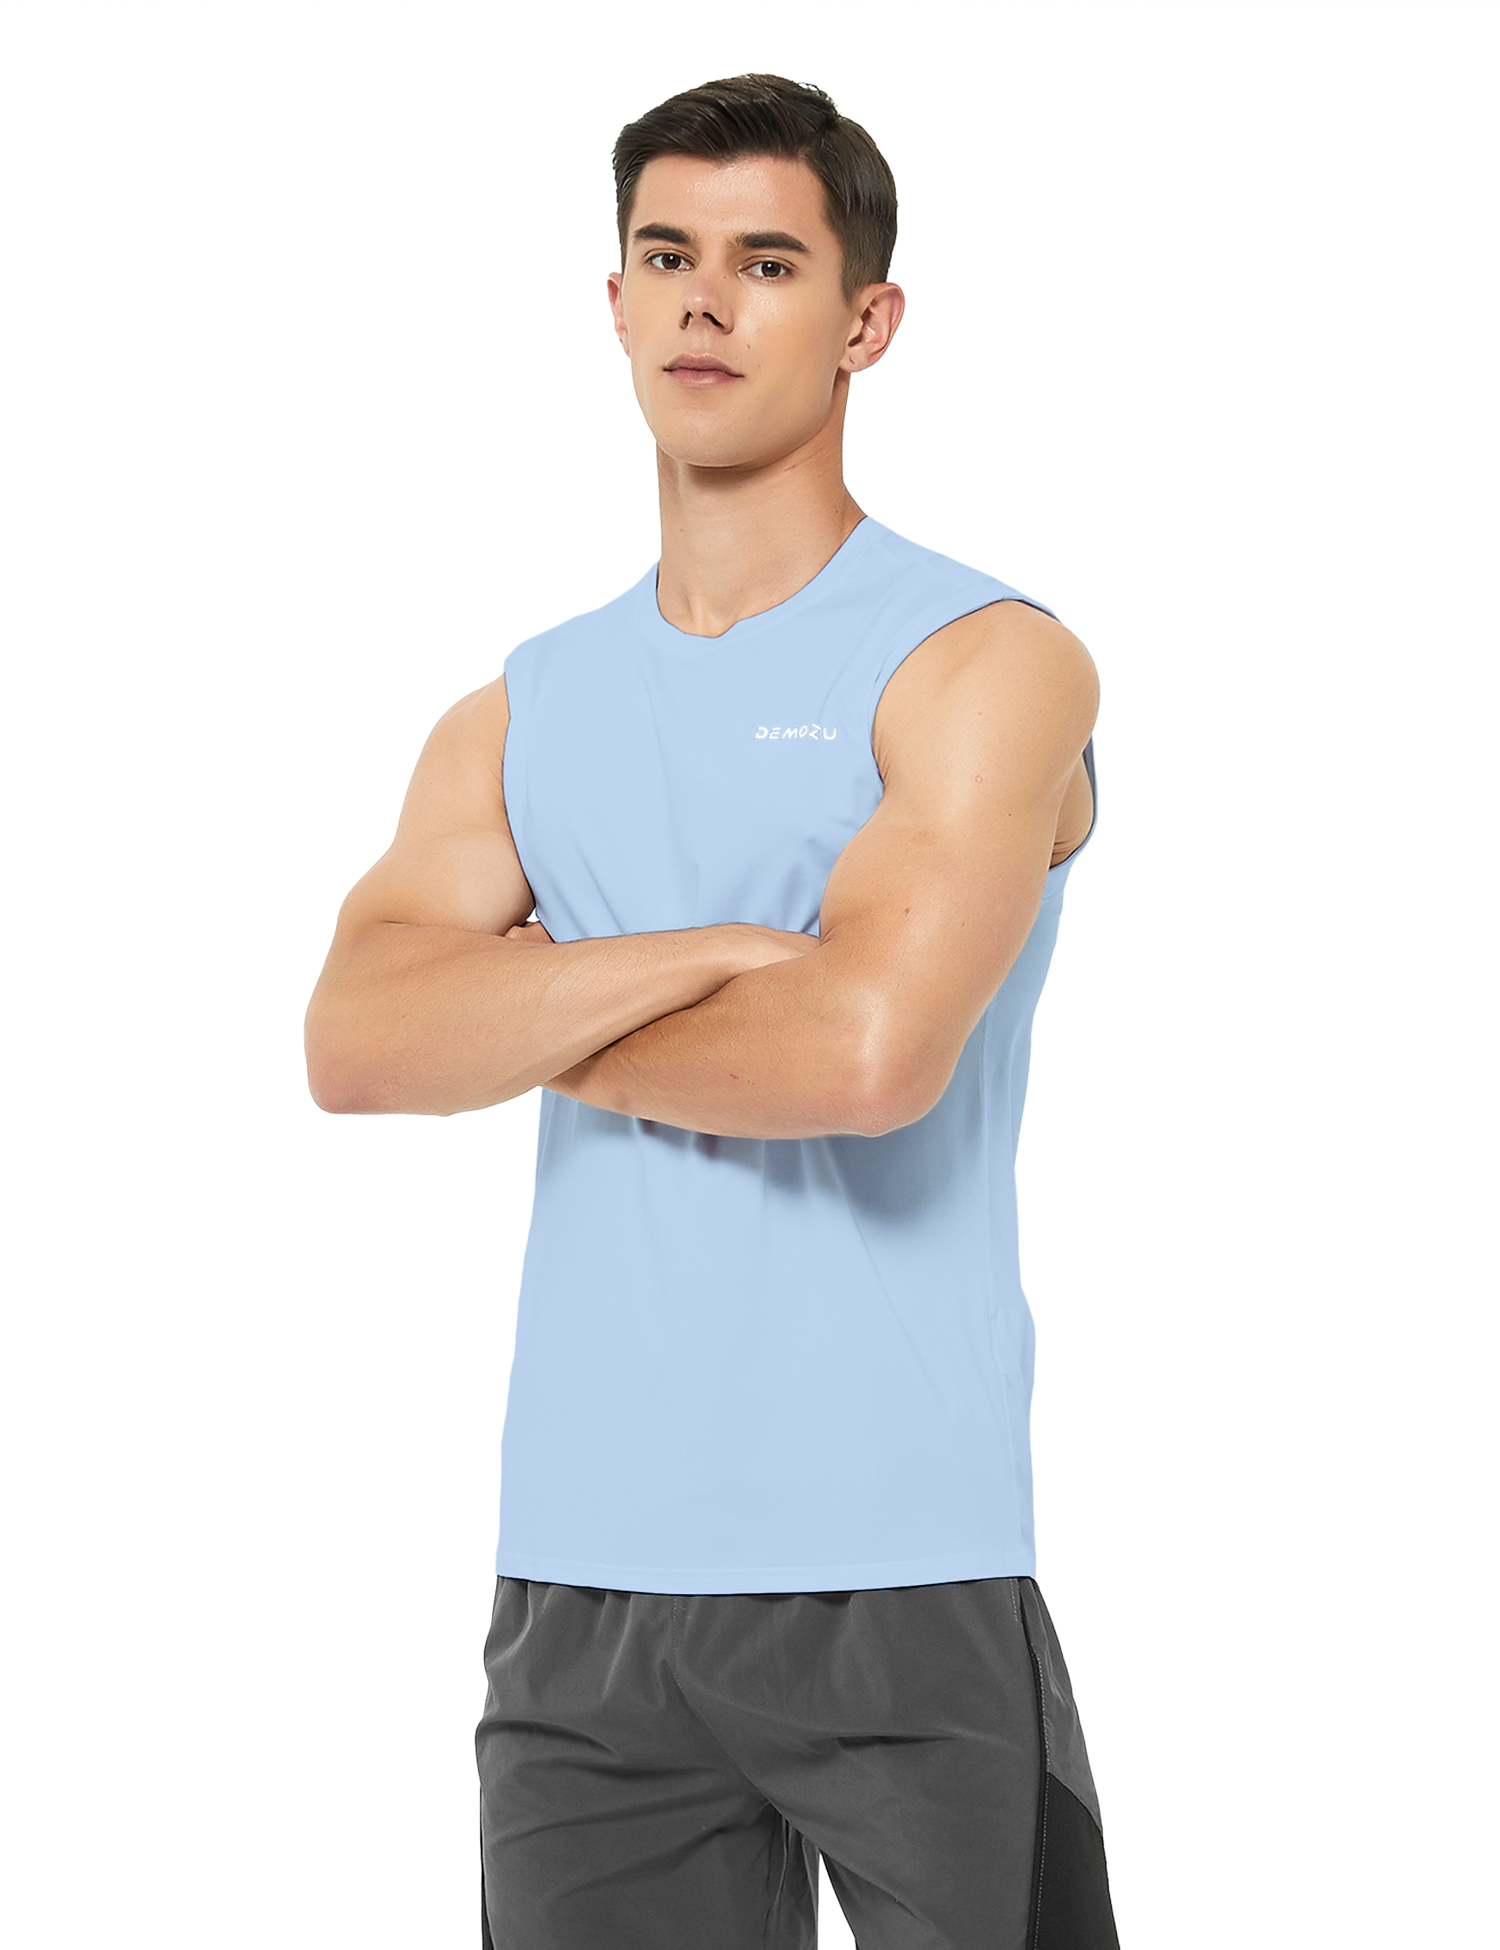 mens sleeveless workout swim shirts lavender blue